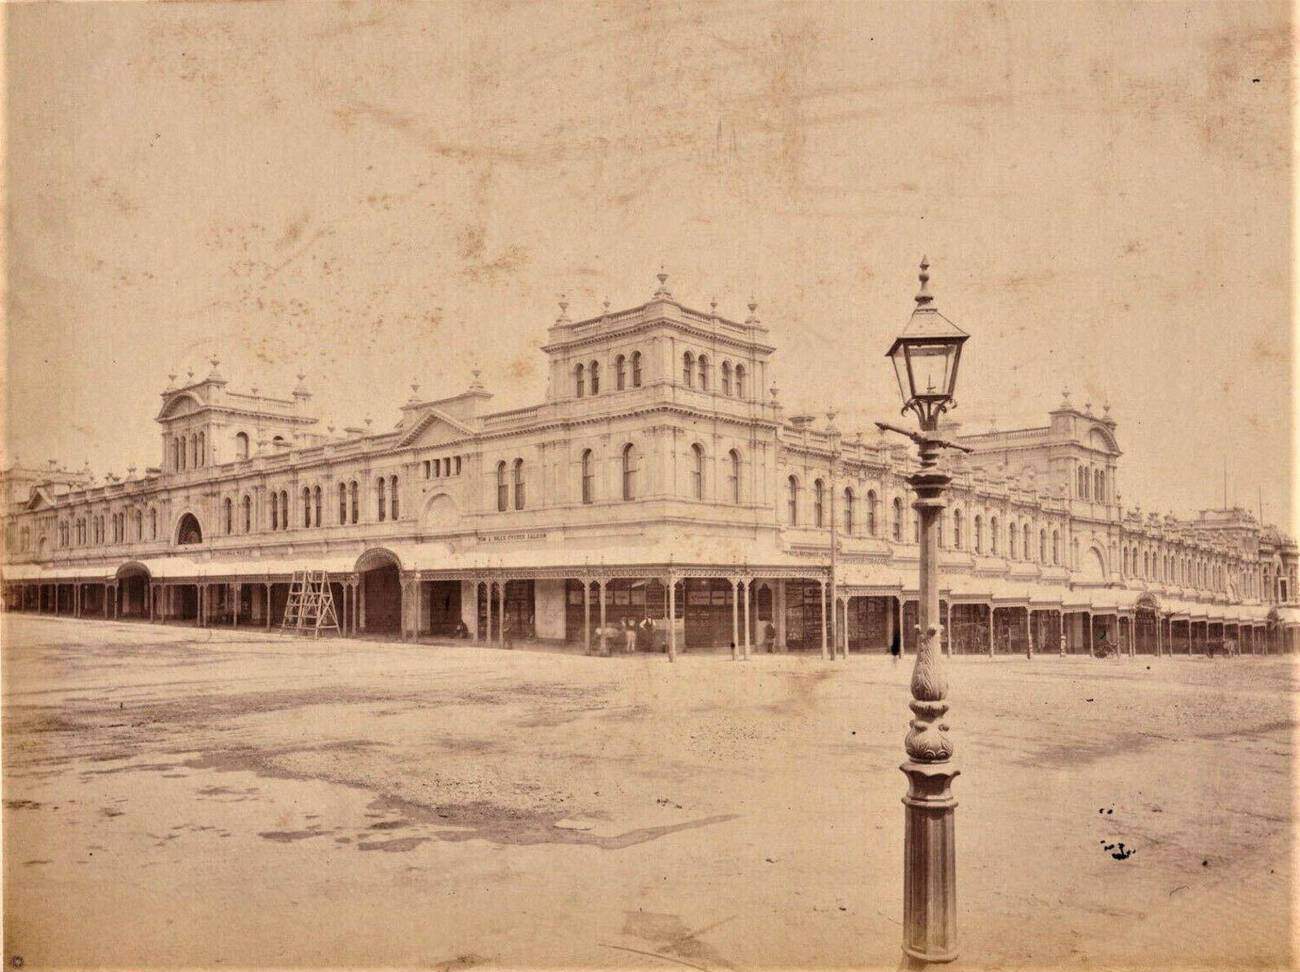 Eastern Market building, Bourke Street, Melbourne, 1880s